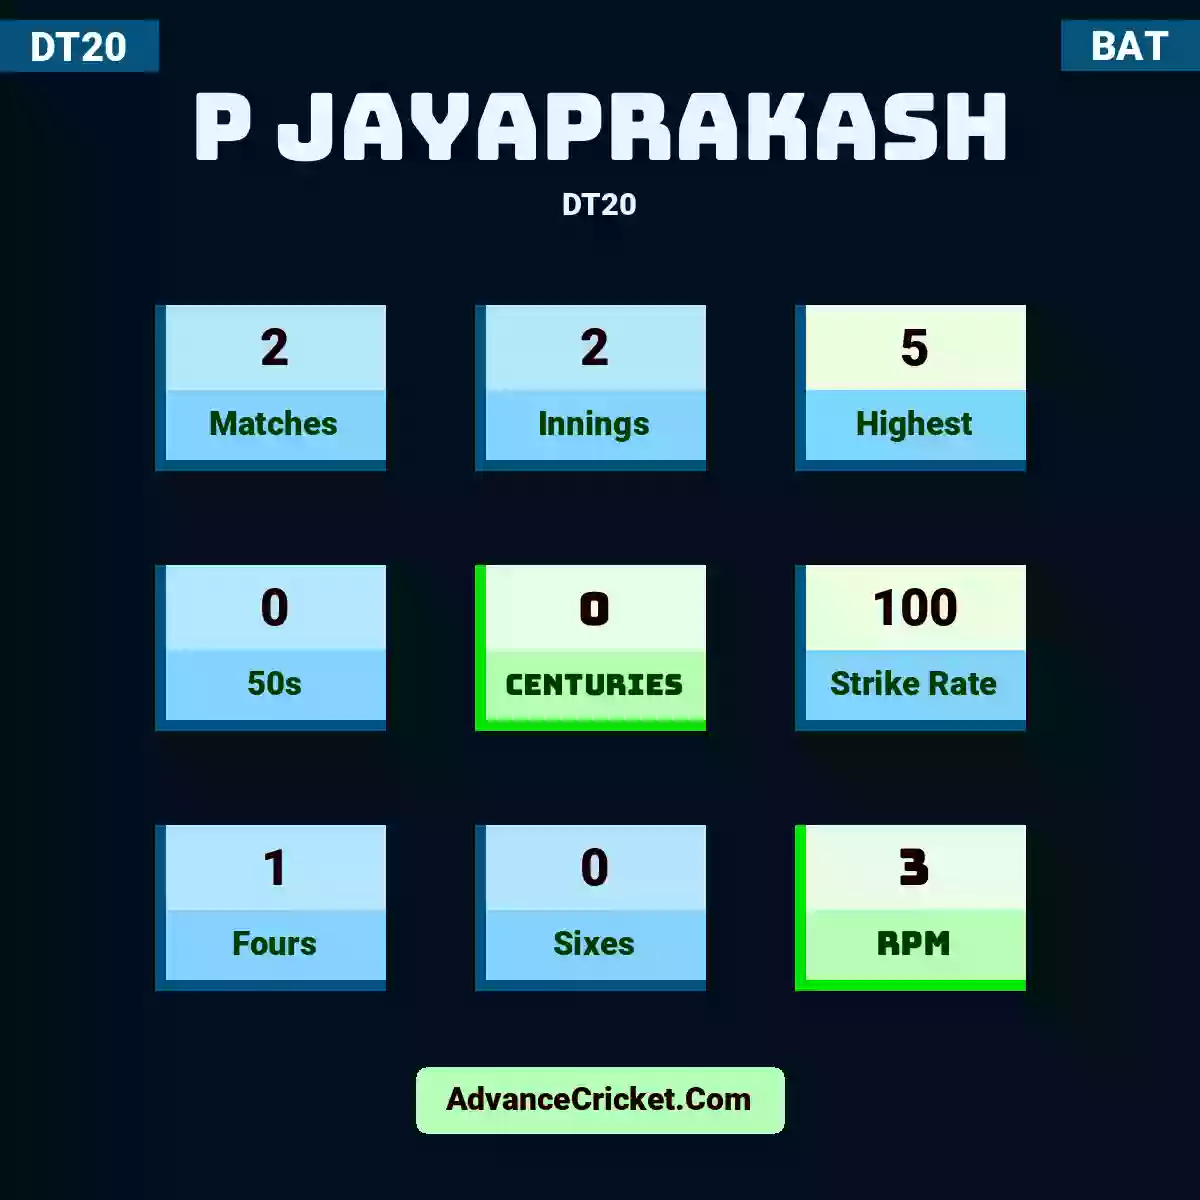 P Jayaprakash DT20 , P Jayaprakash played 2 matches, scored 5 runs as highest, 0 half-centuries, and 0 centuries, with a strike rate of 100. P.Jayaprakash hit 1 fours and 0 sixes, with an RPM of 3.